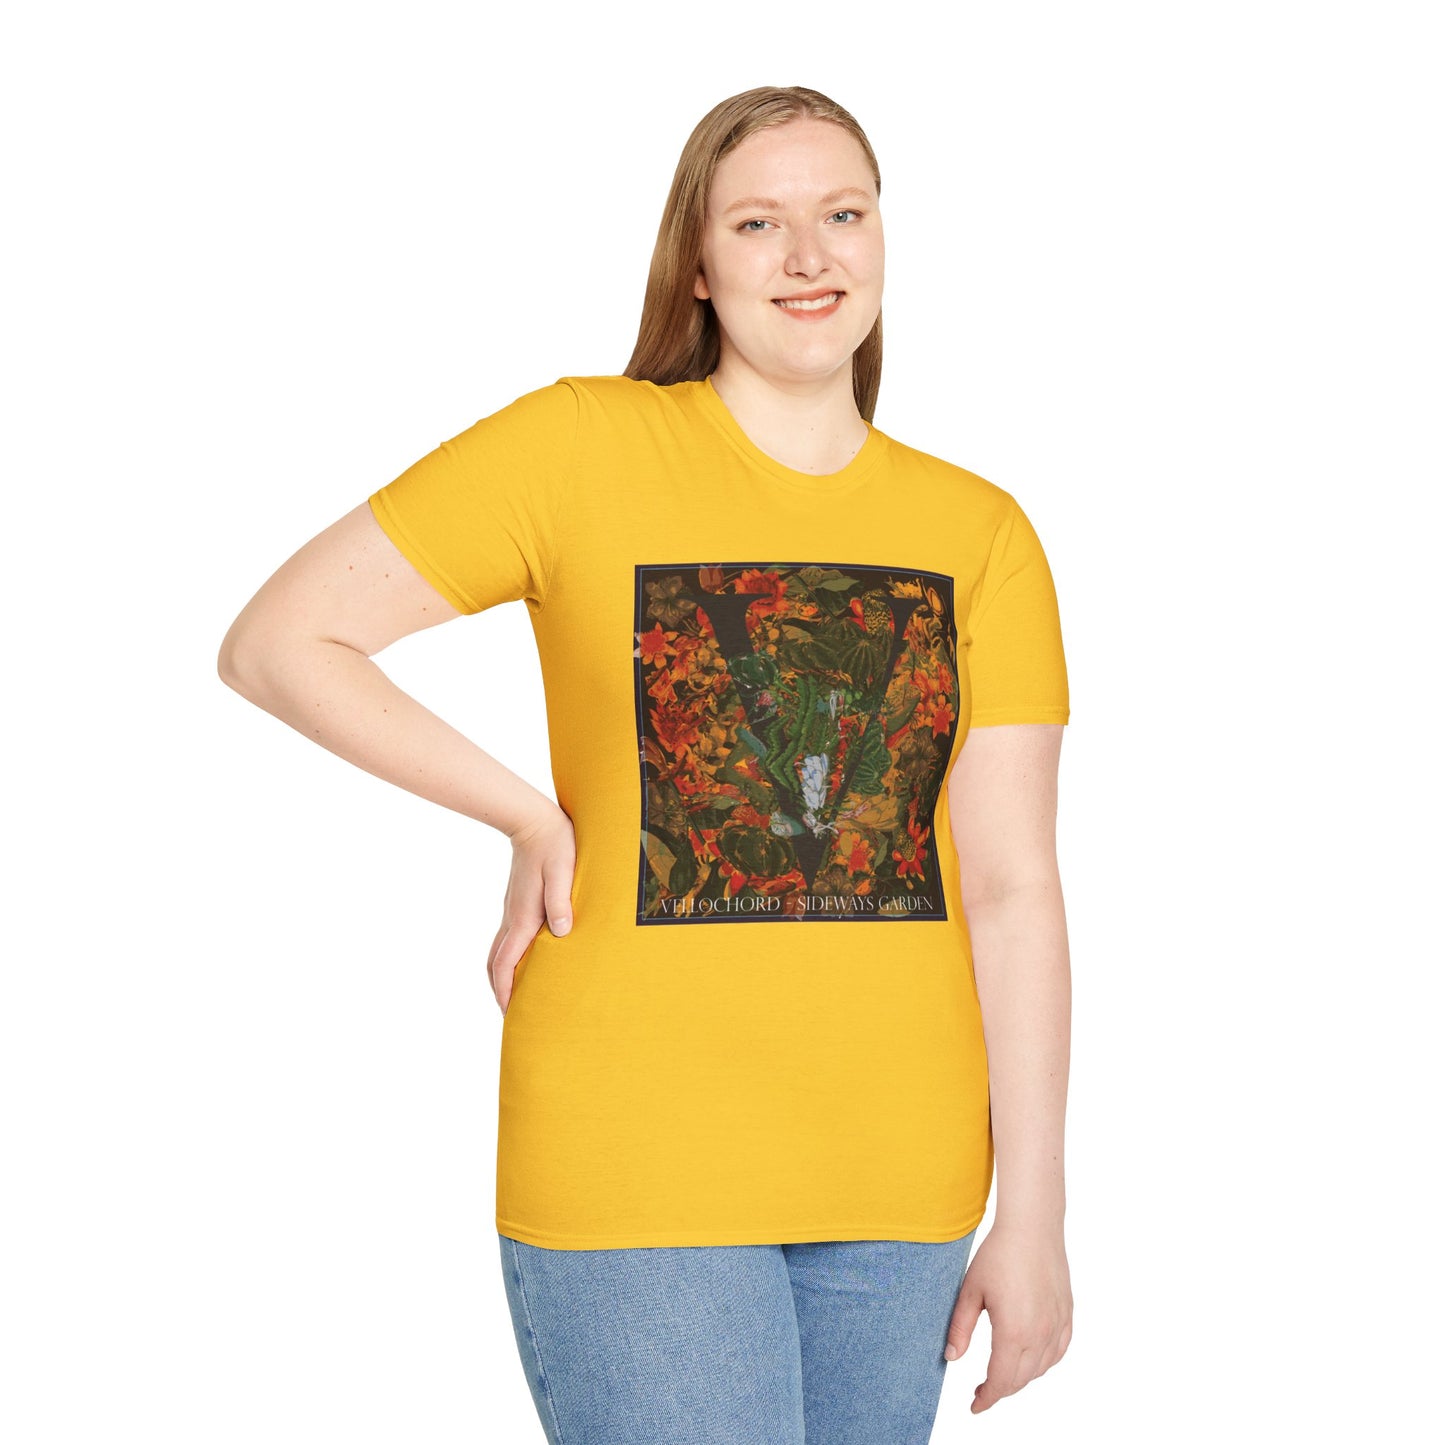 Vellochord Album Unisex Softstyle T-Shirt